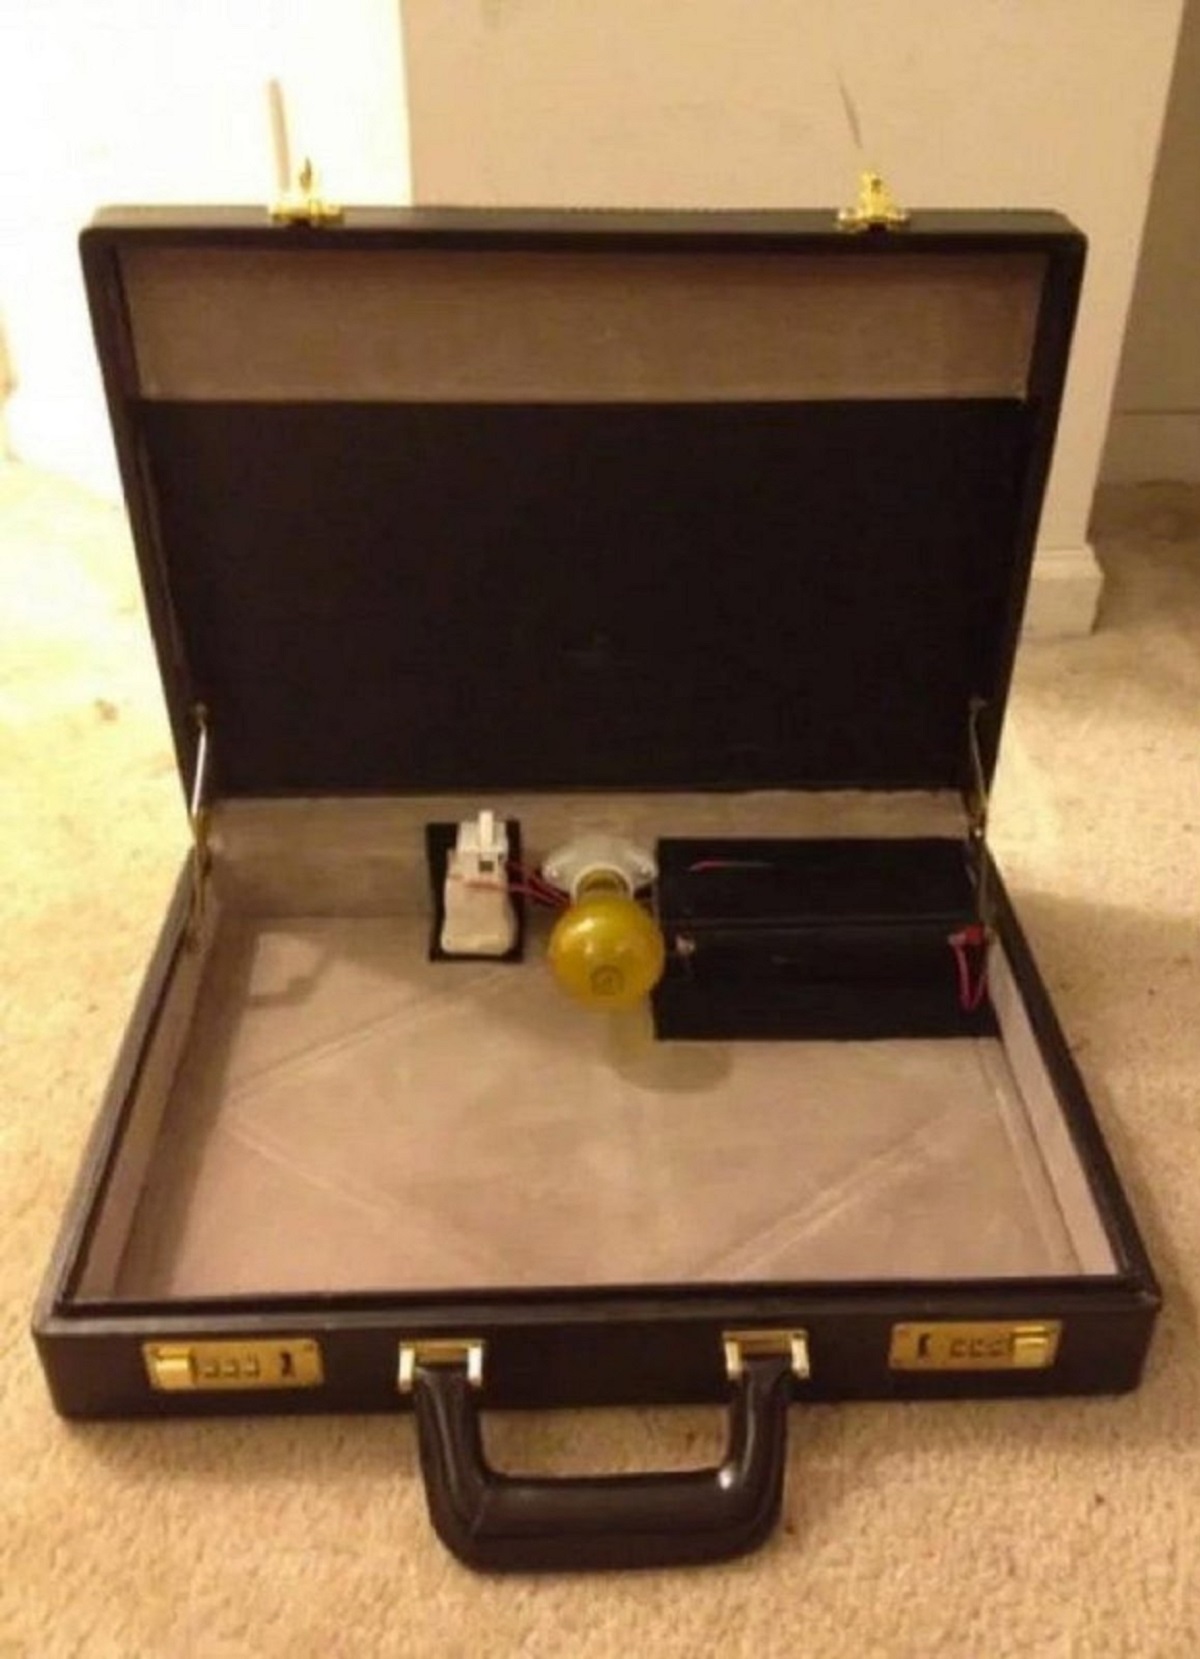 The infamous Pulp Fiction briefcase